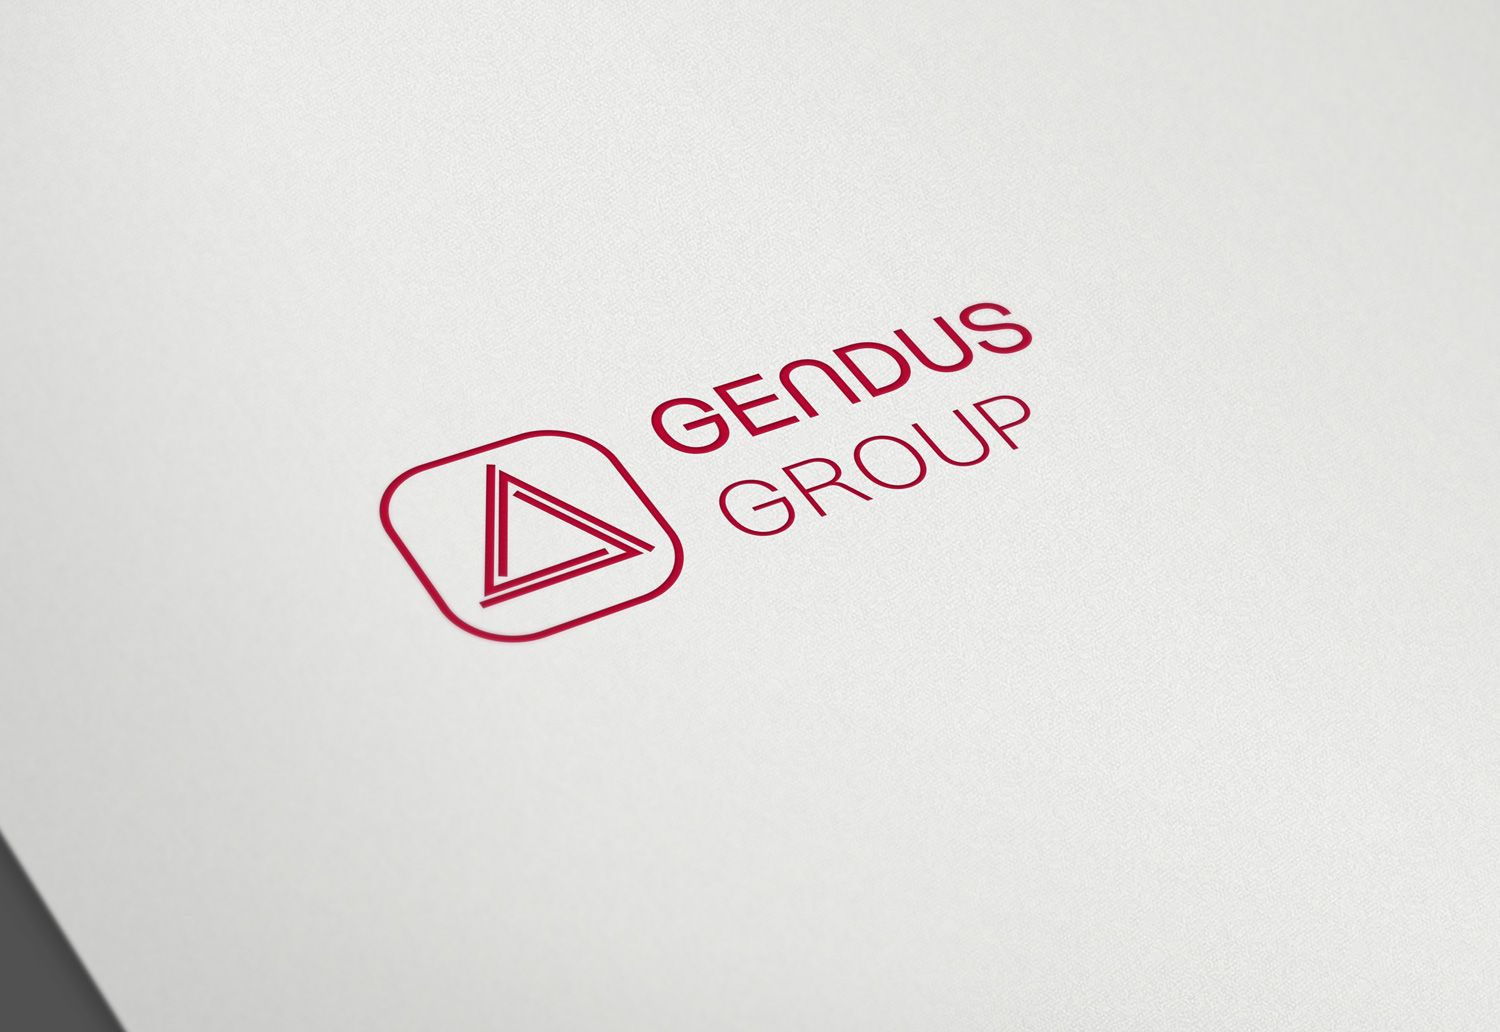 Дизайн логотипа GENDUS GROUP - дизайнер Z3YKANN